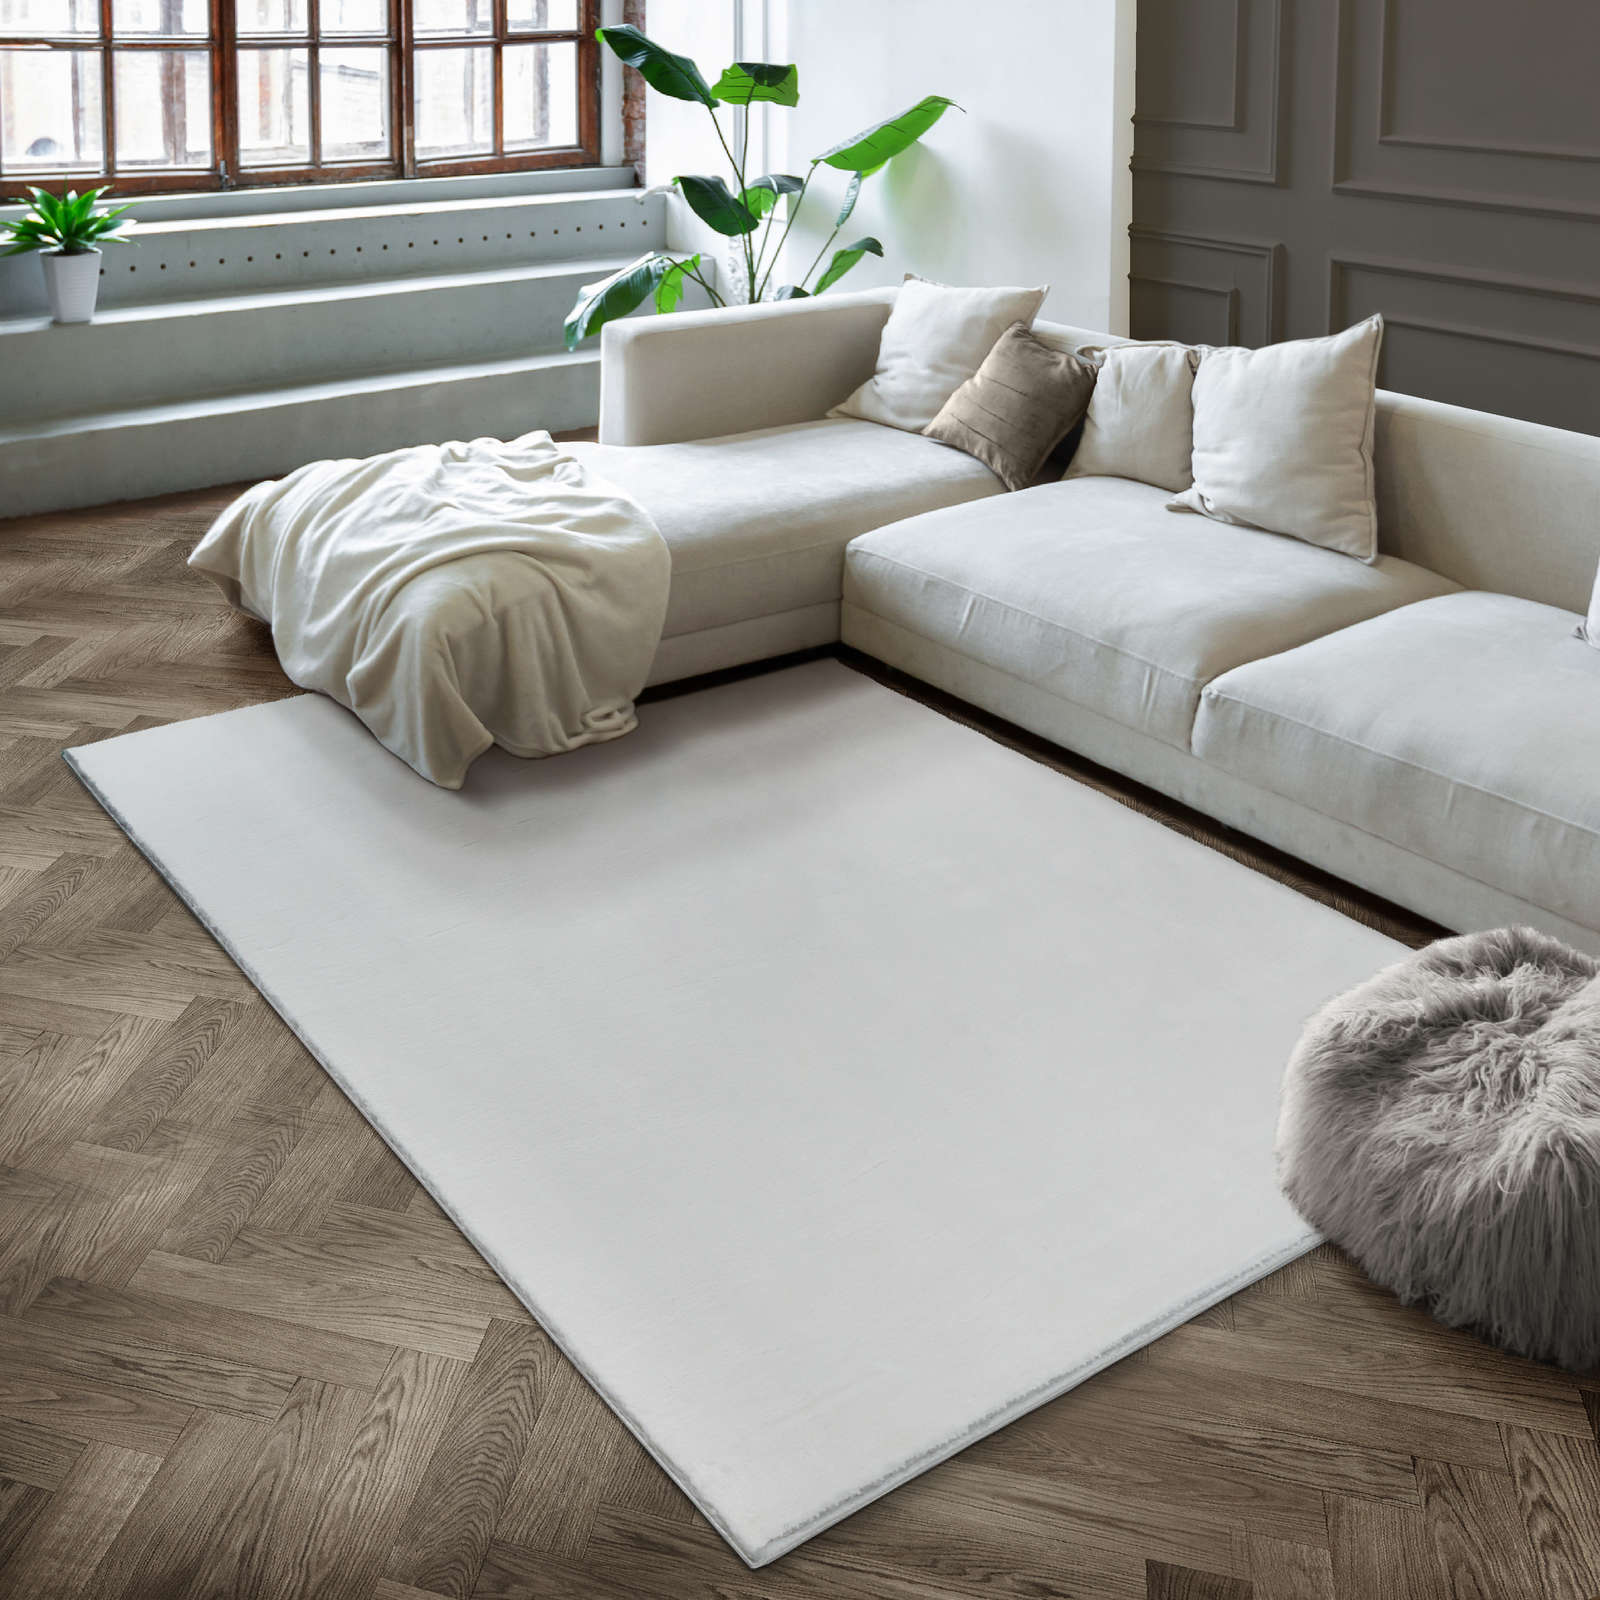             Fluffy high pile carpet in pleasant cream - 290 x 200 cm
        